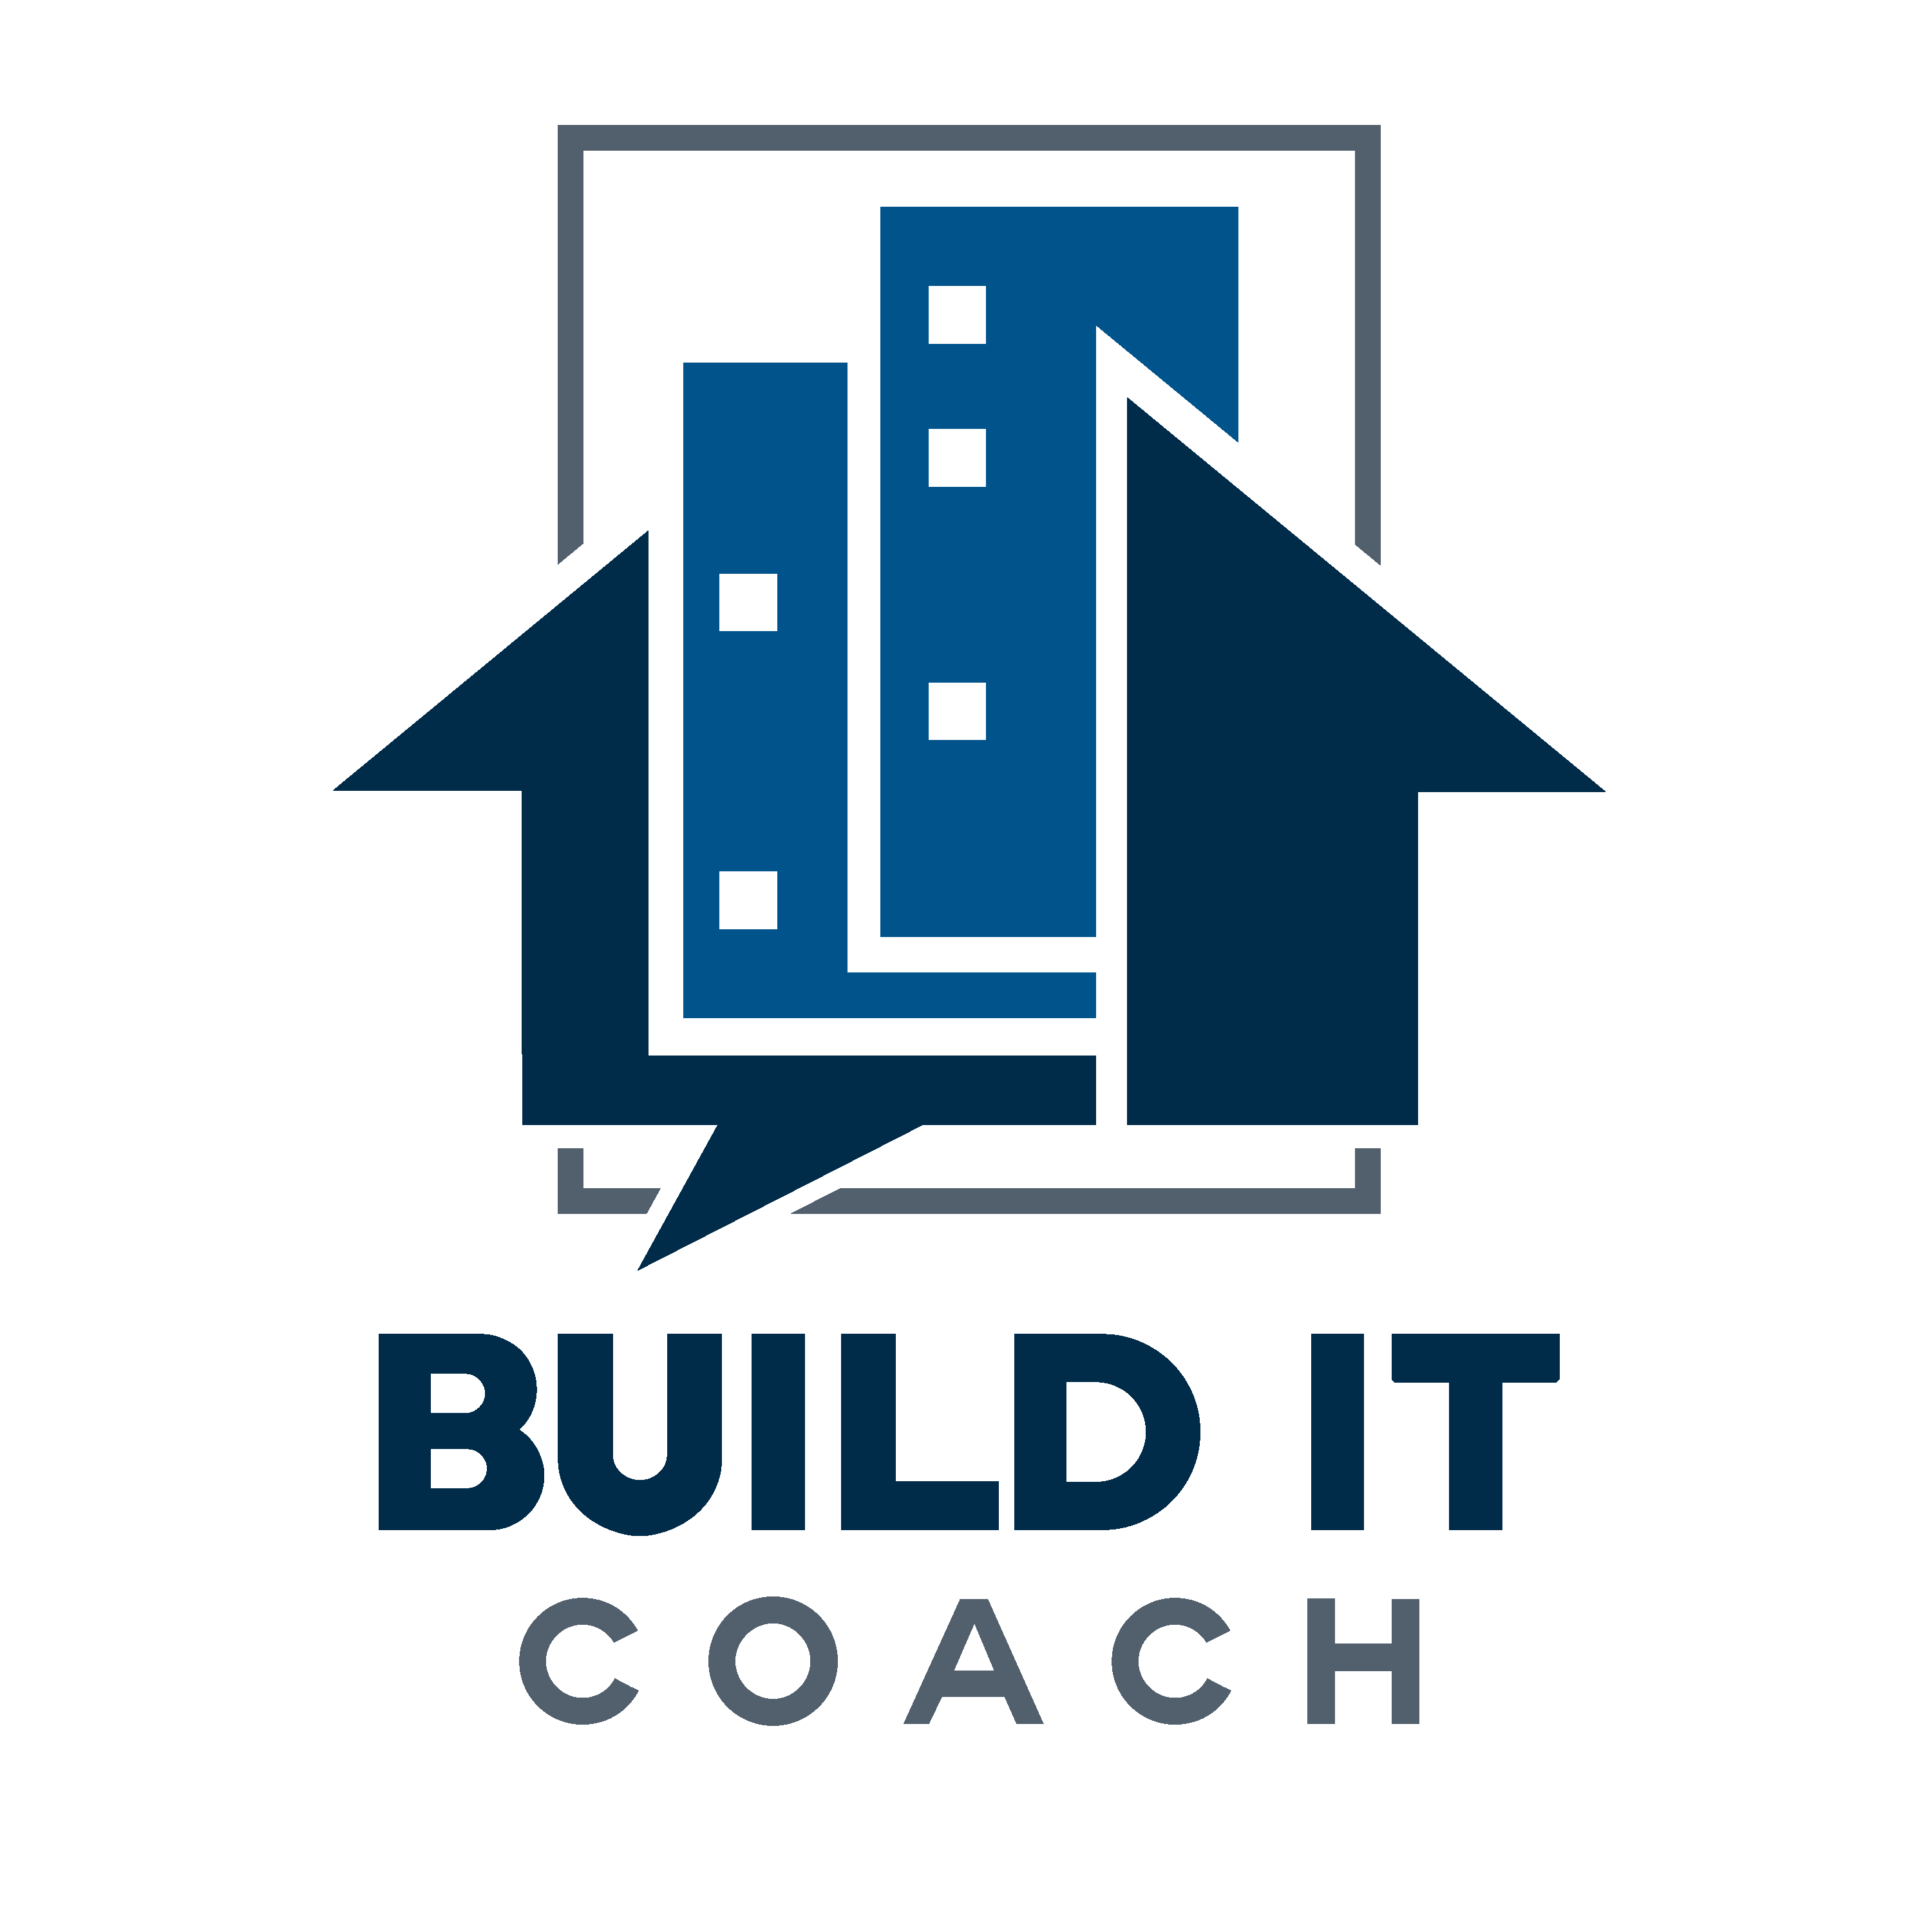 Artwork for Build It Coach: Renovation, Remodeling, Home Improvement